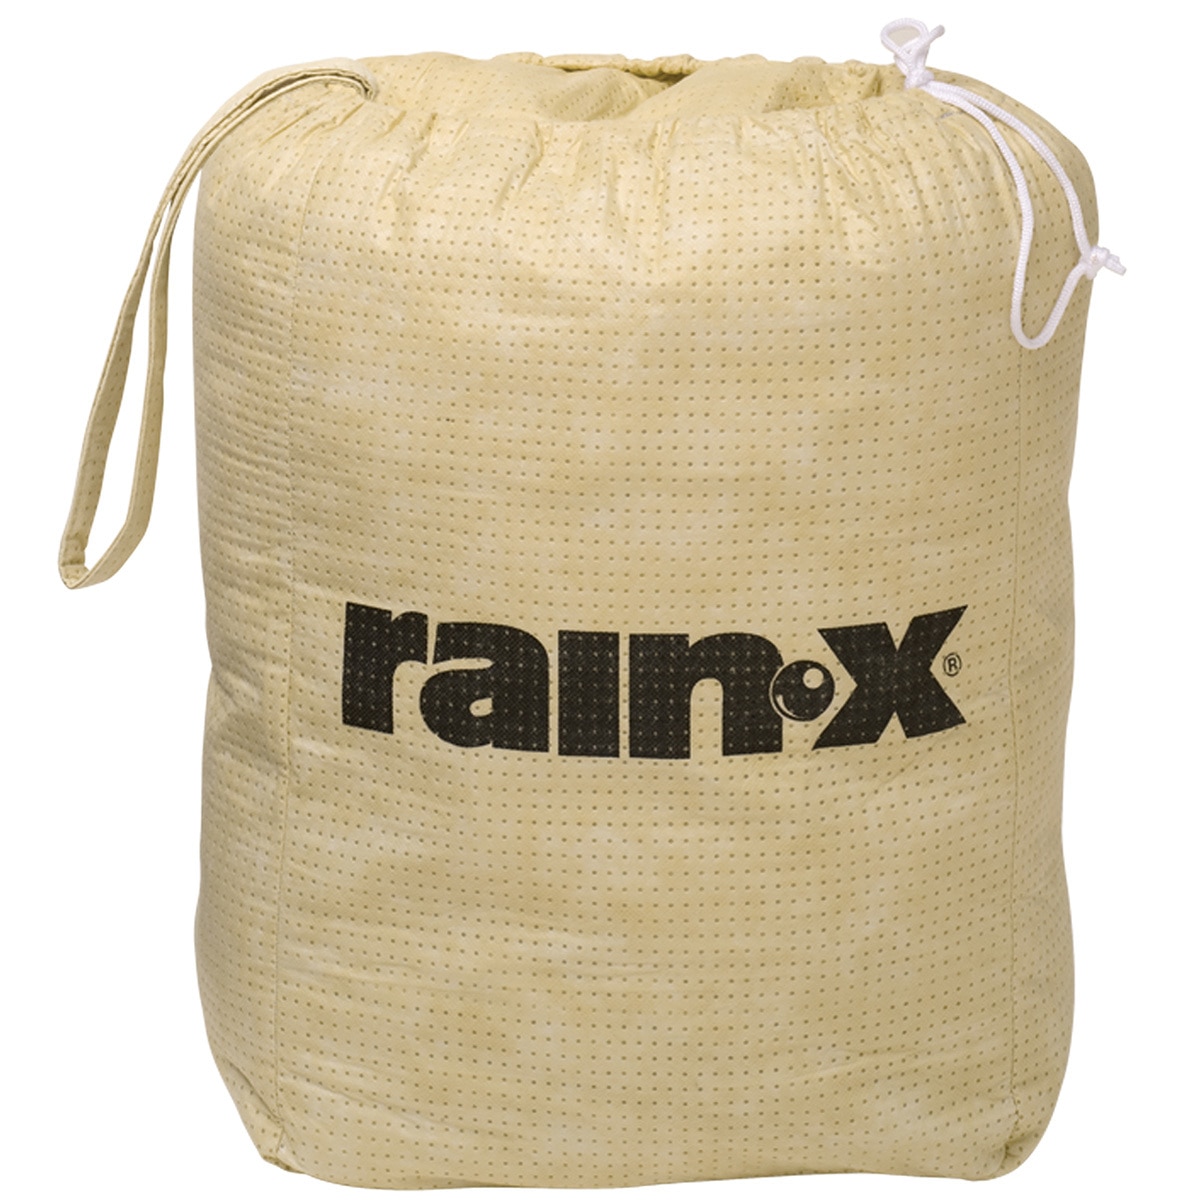 RainX Car Cover